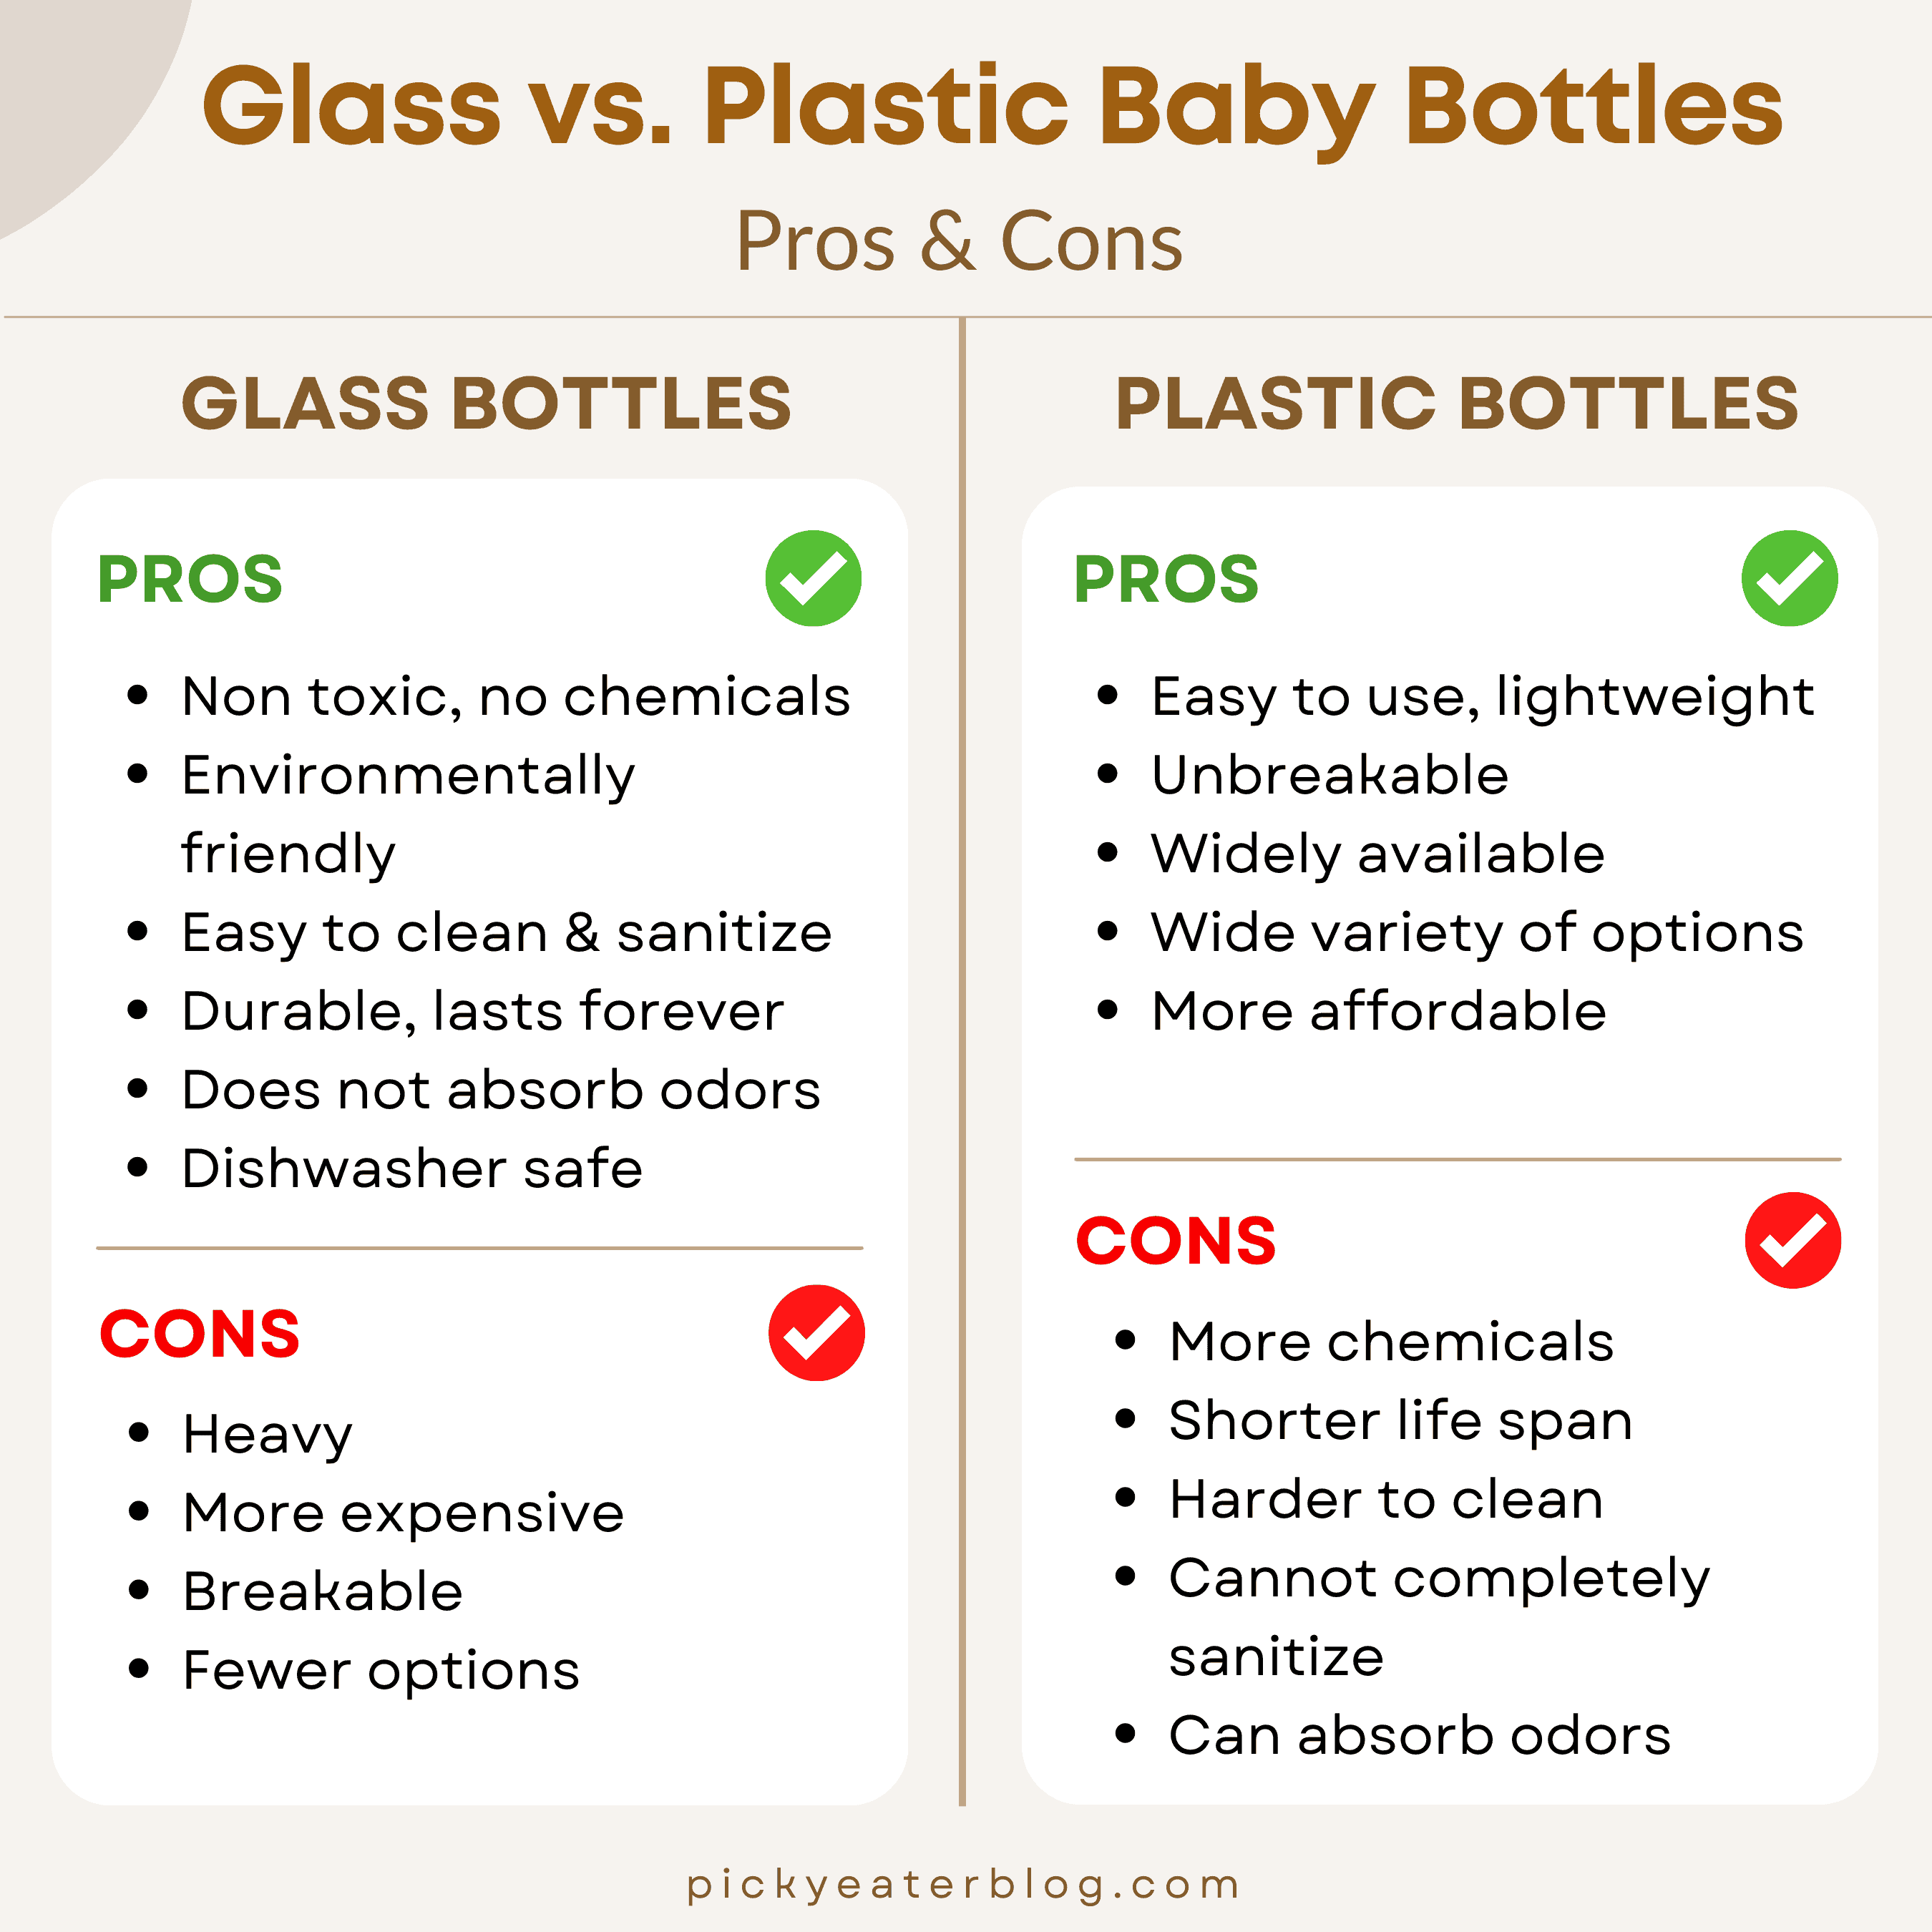 Glass vs. Plastic Baby Bottles Infographic (Pros & Cons).